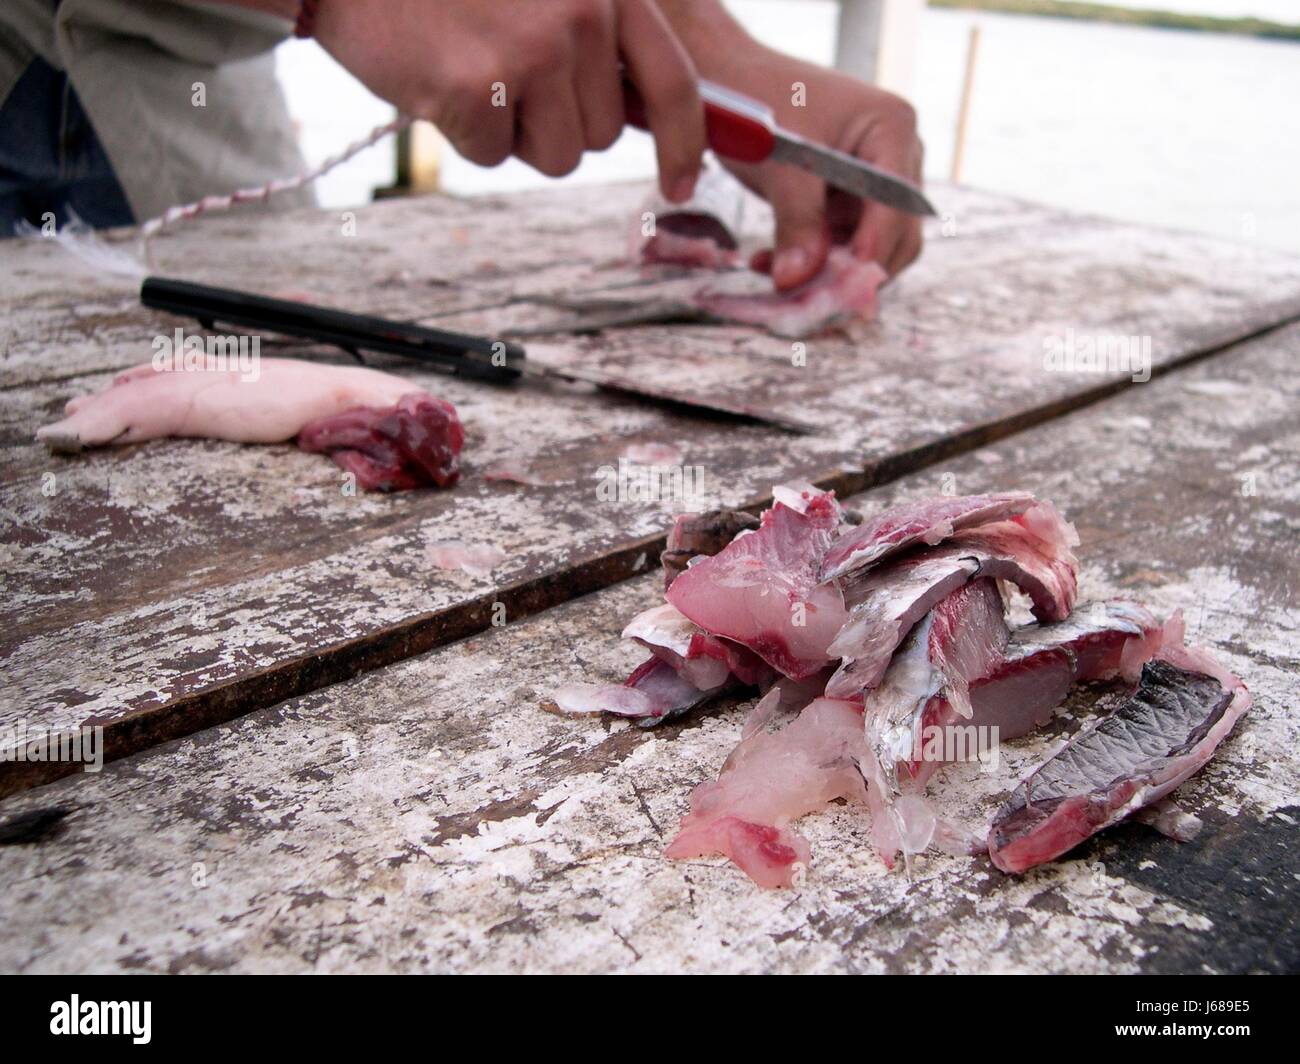 Lebensmittel Nahrungsmittel Winkel Fisch Köder rohes Filet schneiden Arm Waffe Messer Messer gefüllt Stockfoto